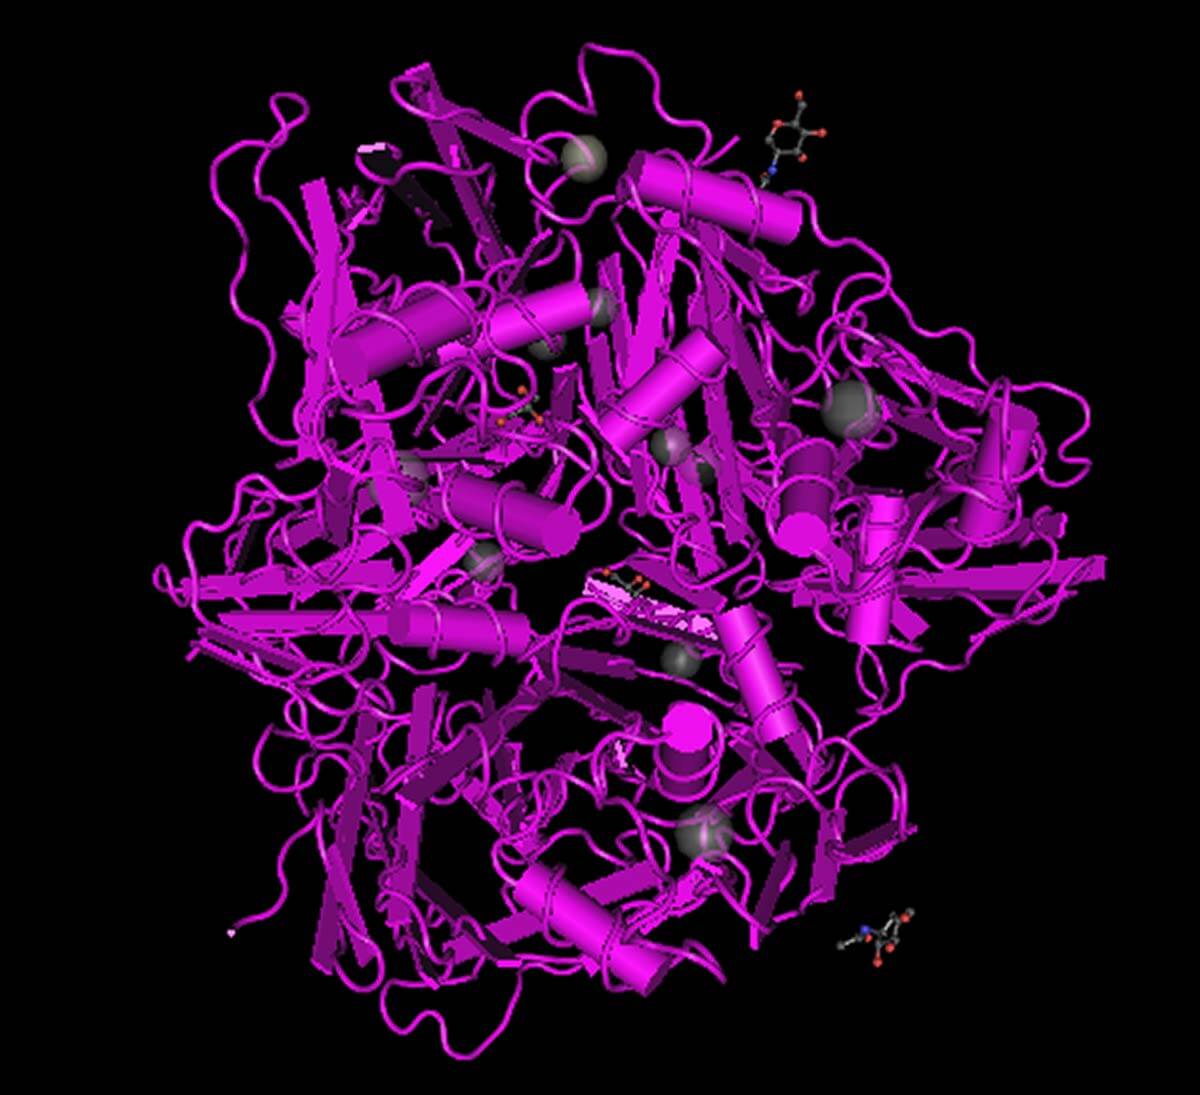 Ceruloplasmin Antibody Market